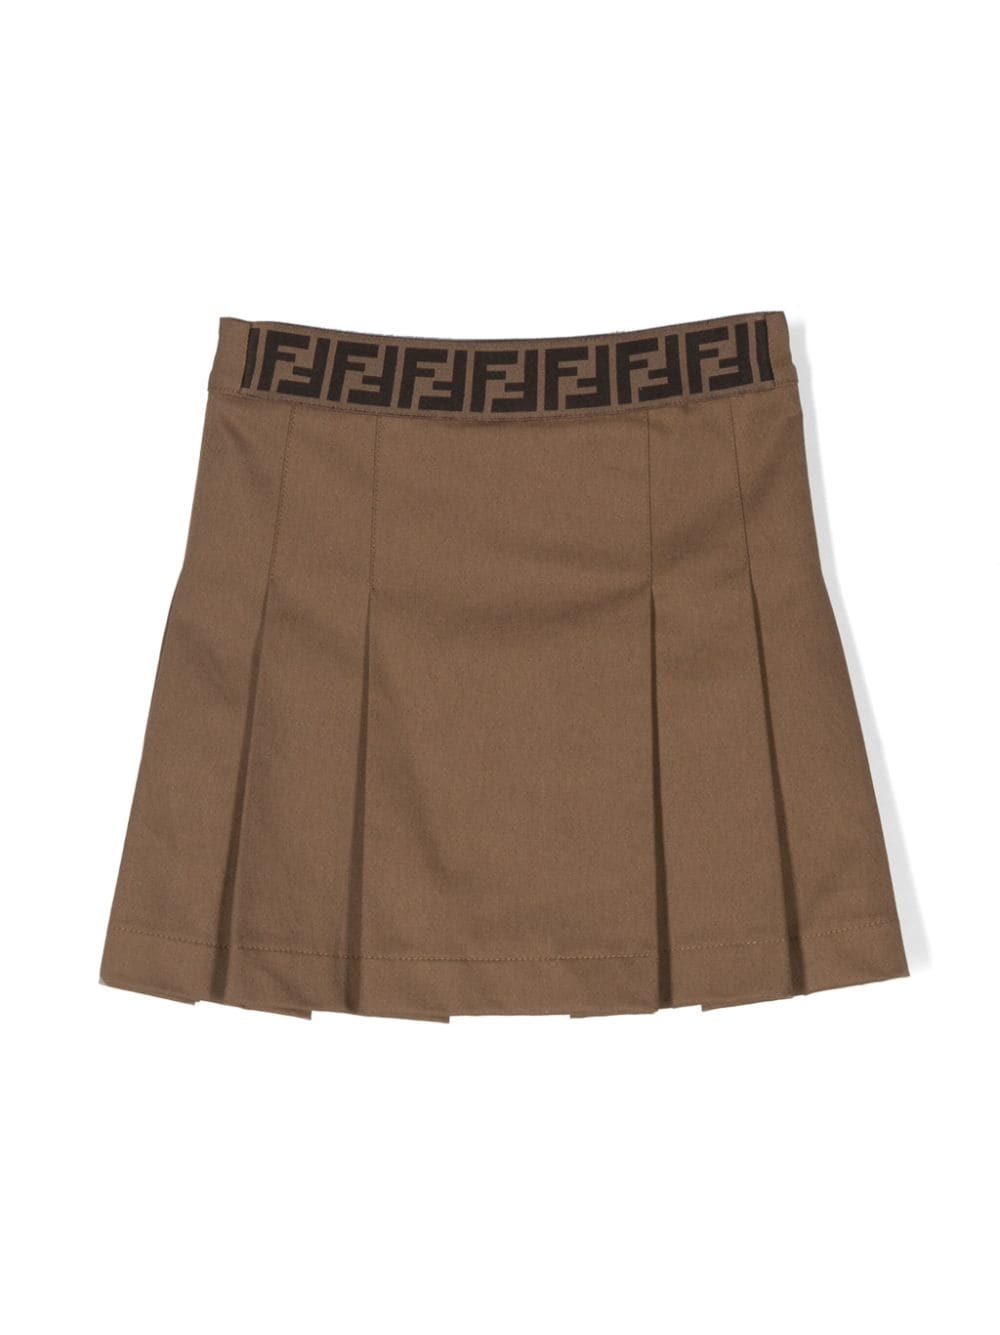 Brown cotton gabardine girl FENDI skirt | Carofiglio Junior